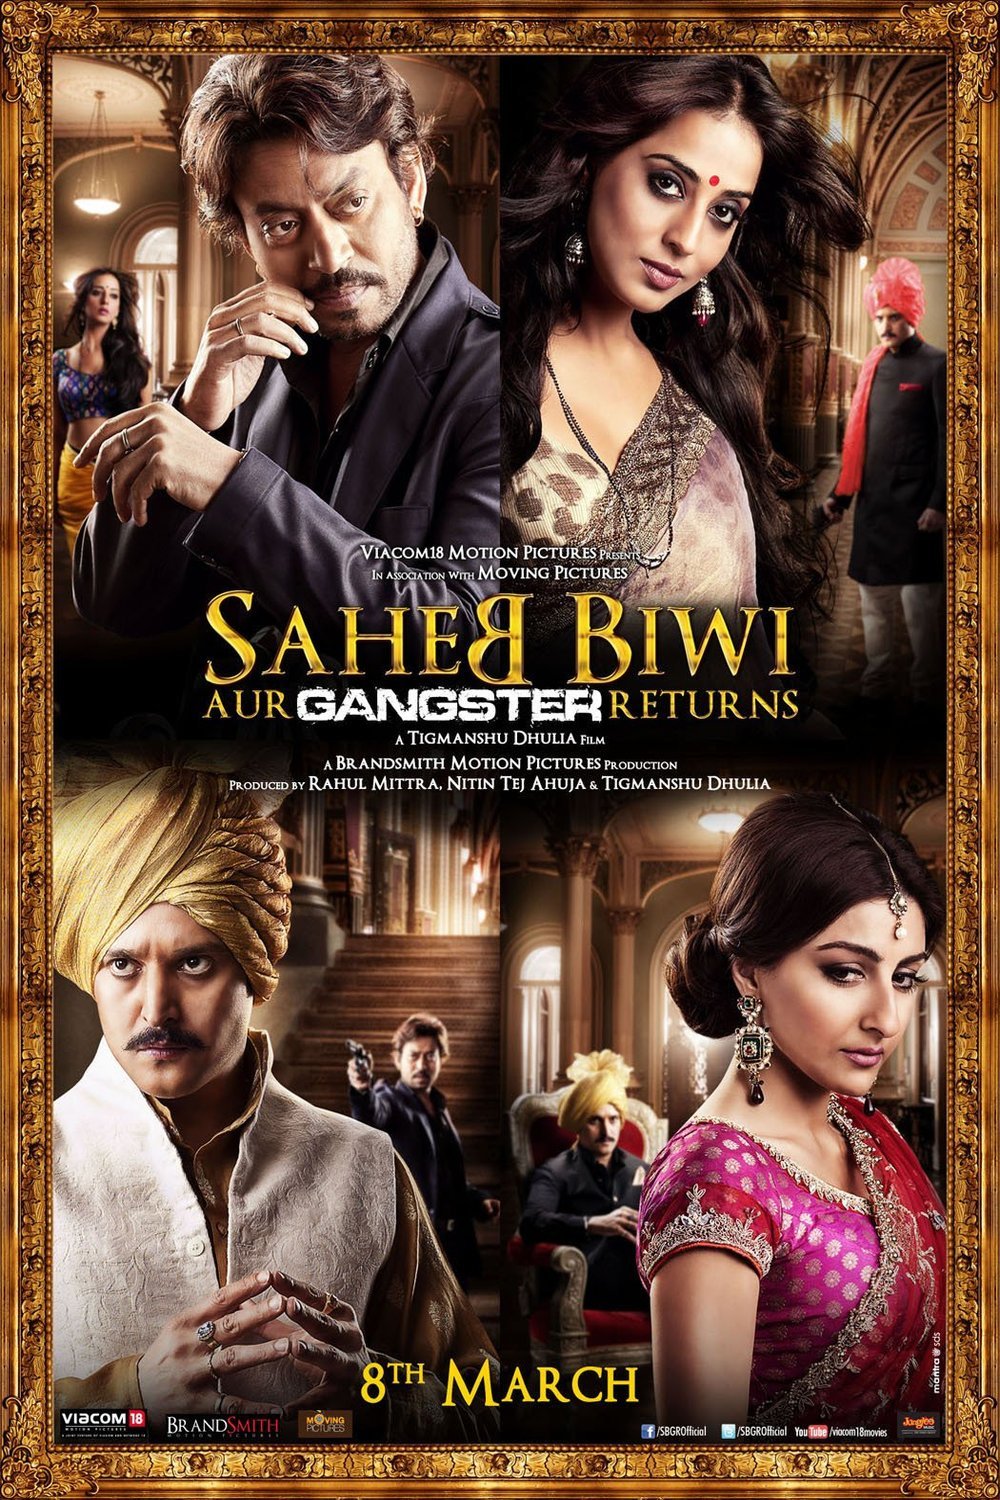 Hindi poster of the movie Saheb Biwi Aur Gangster Returns